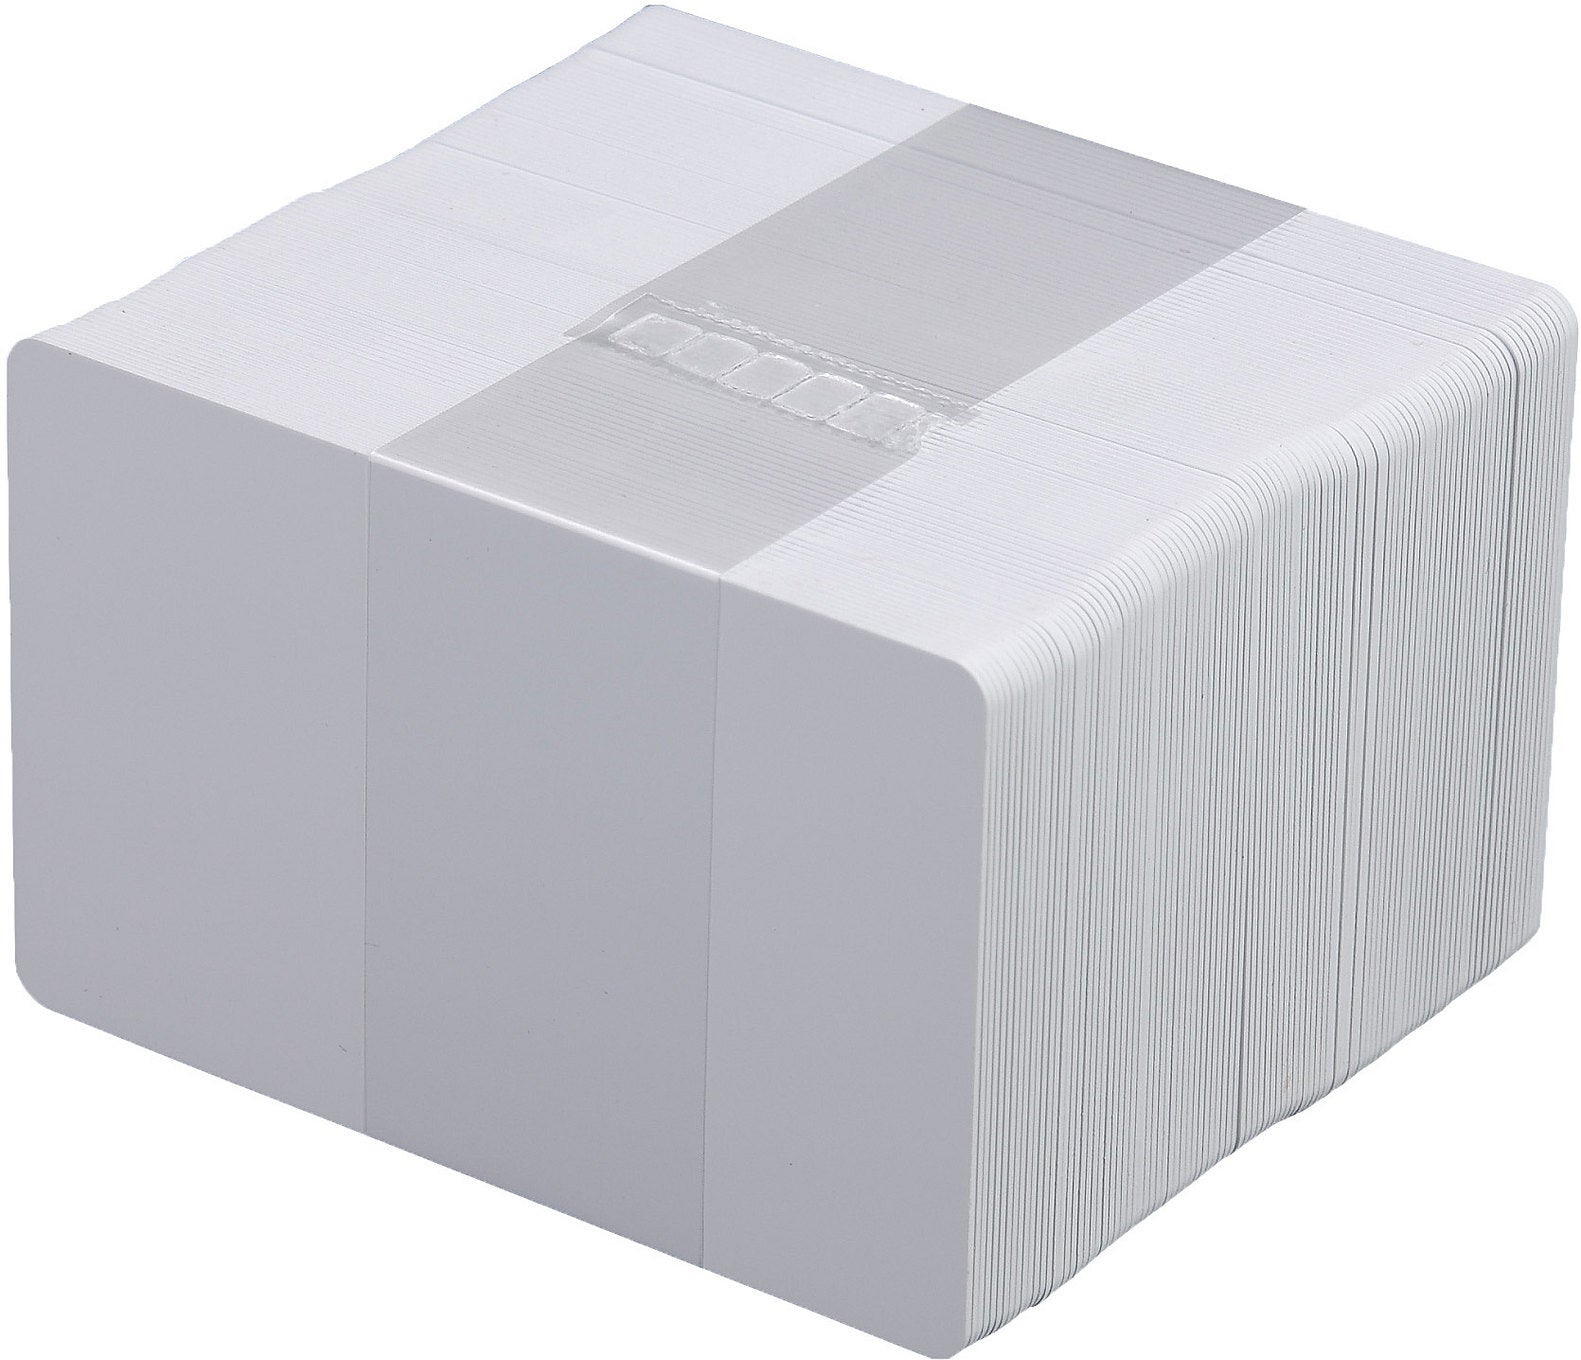 Blank White PVC Plastic ID Cards 760 micron | SPLIT PACKS - 1